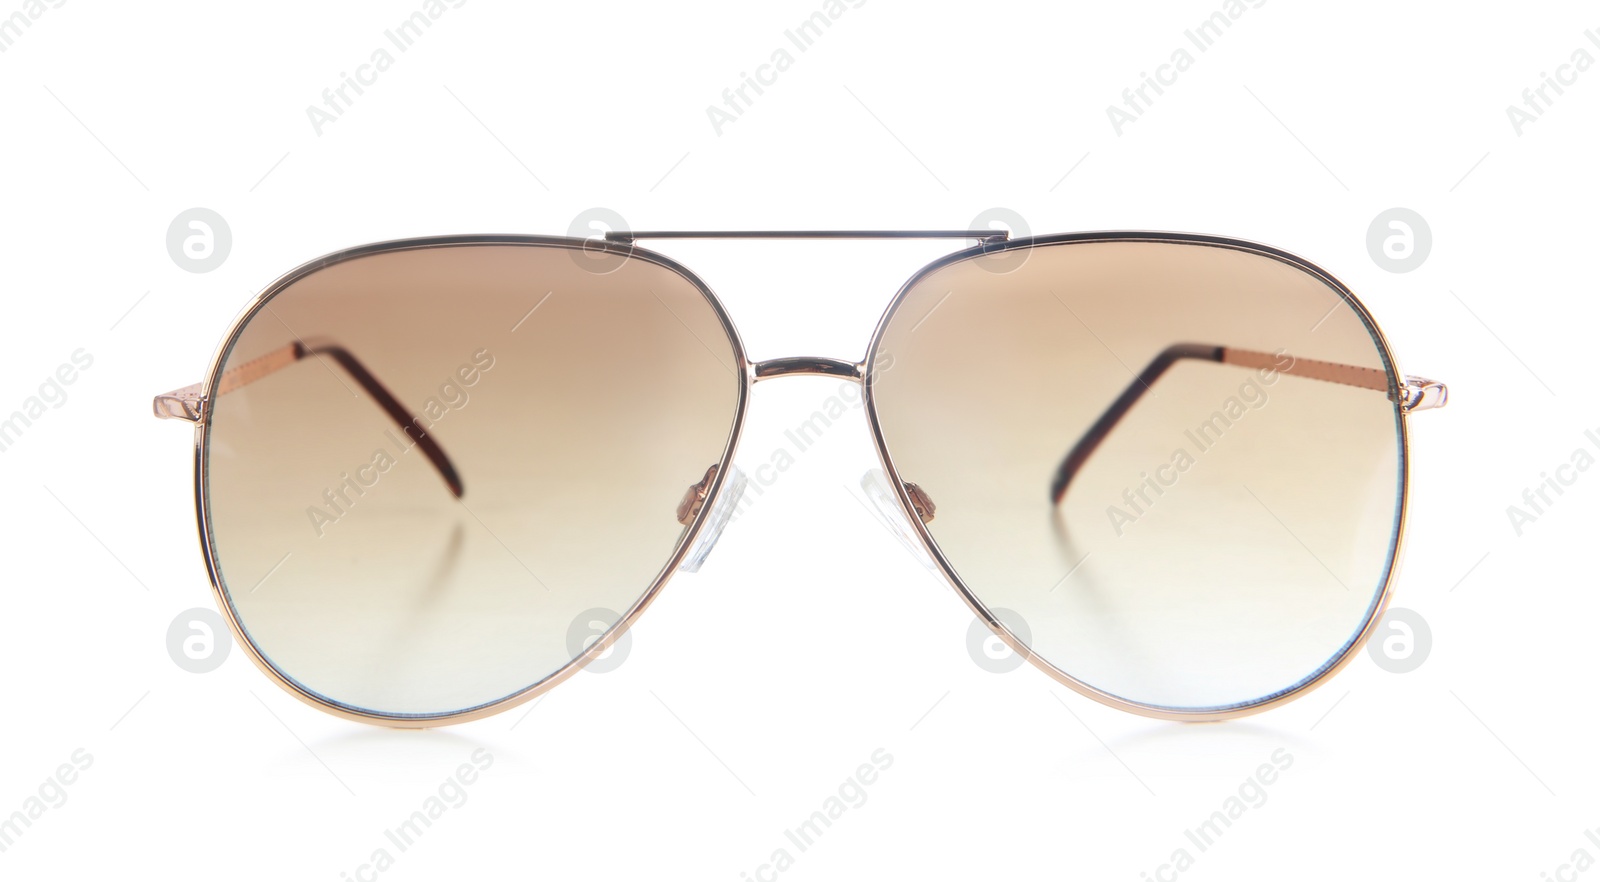 Photo of Stylish sunglasses isolated on white. Beach accessory